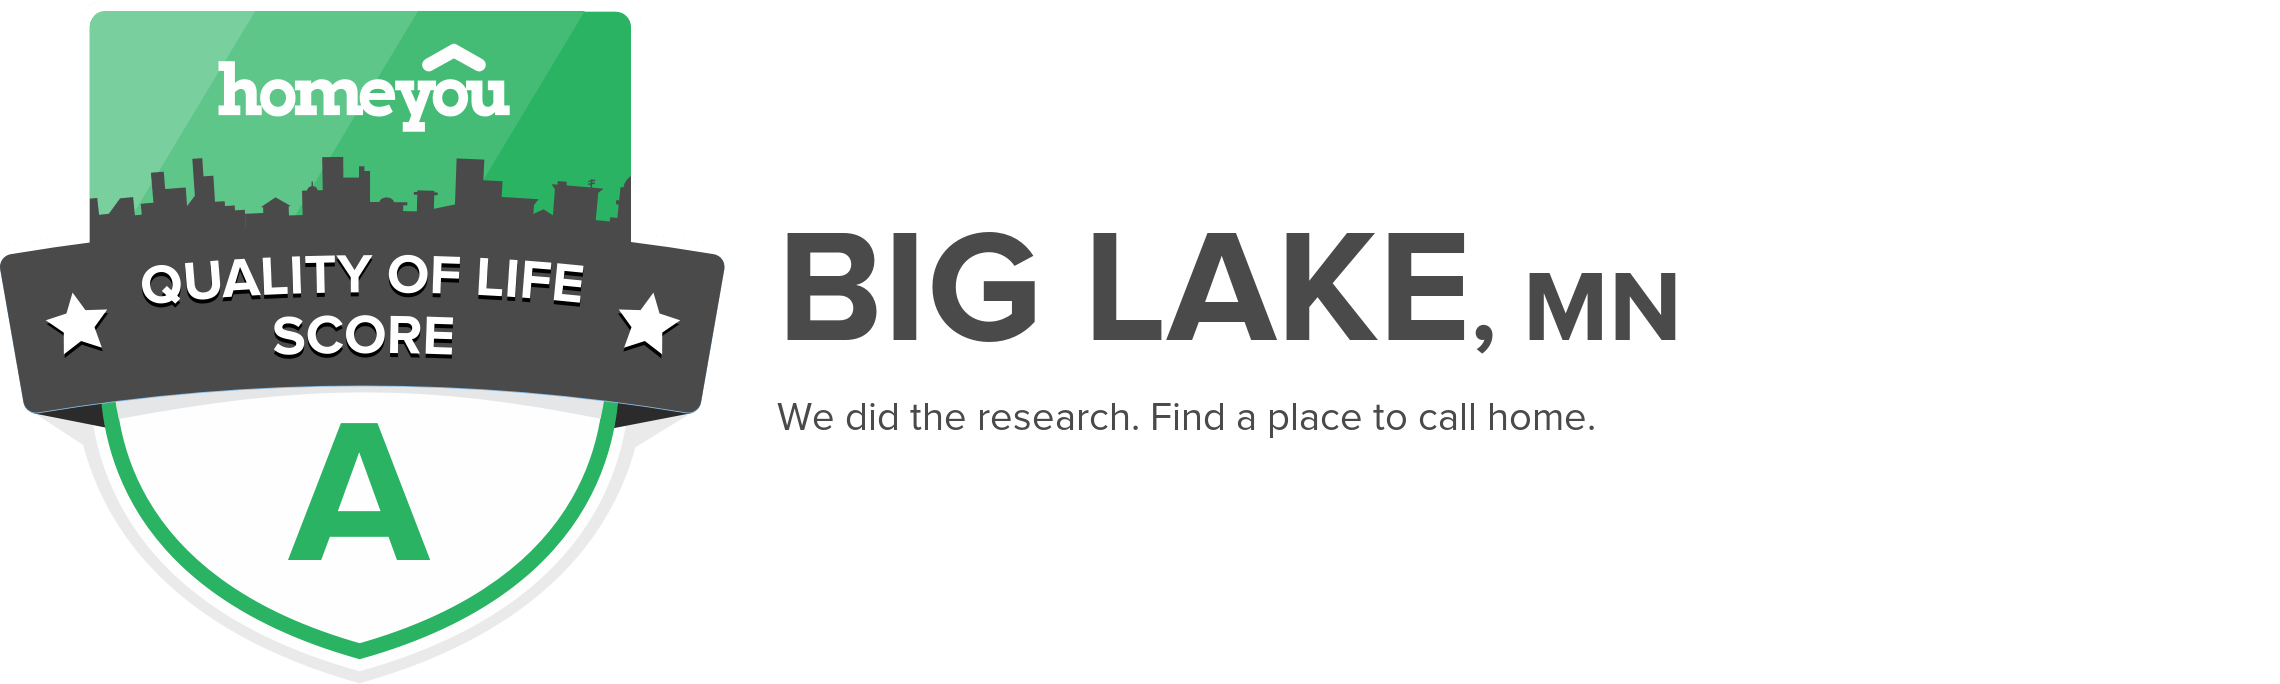 Big Lake, MN